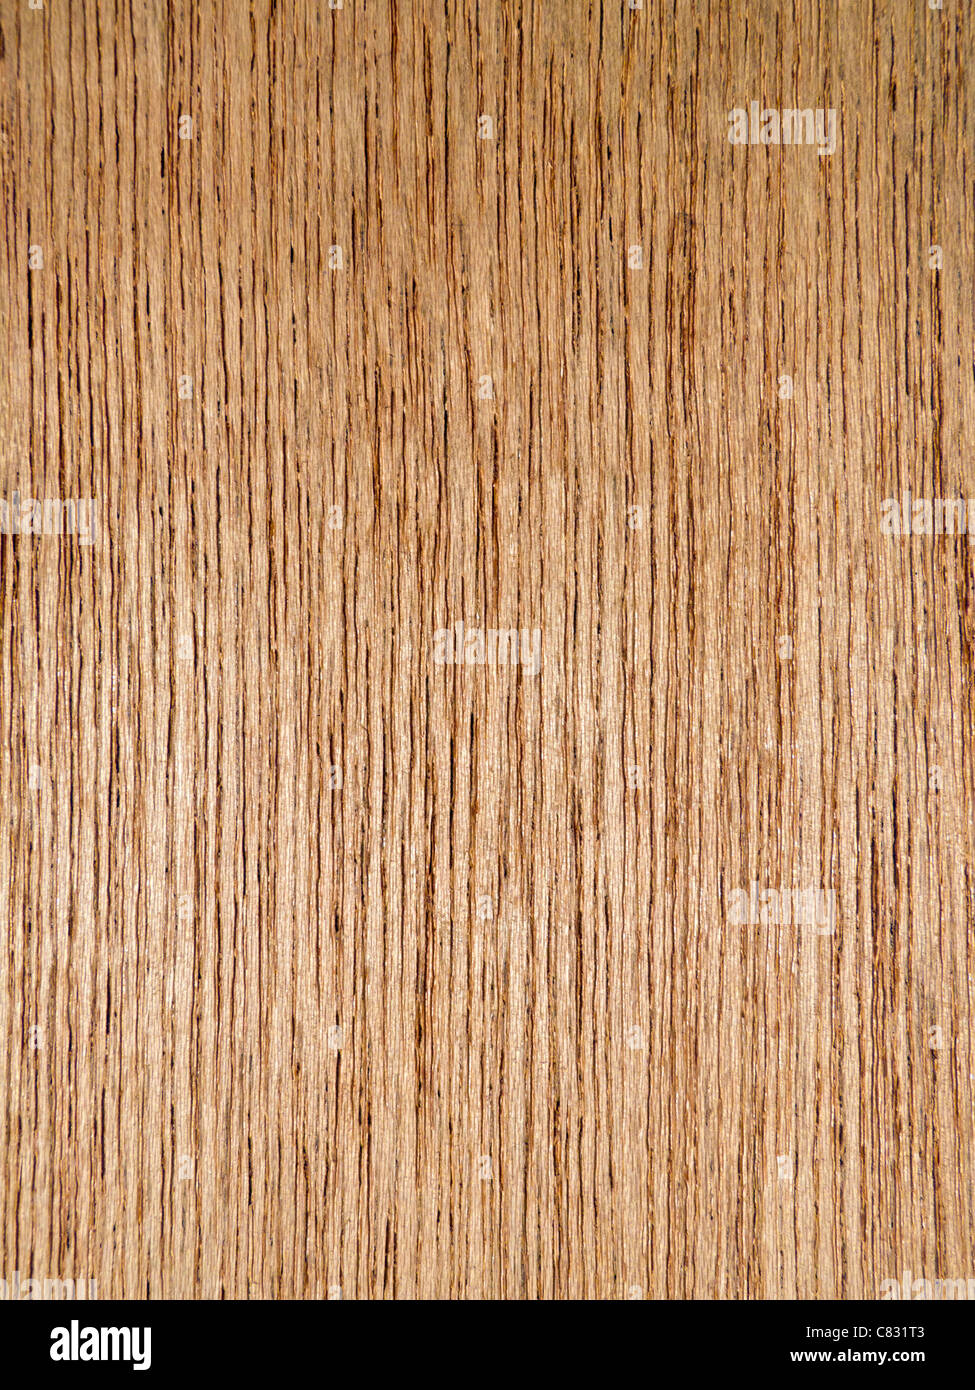 Wood Grain Texture Stock Photo